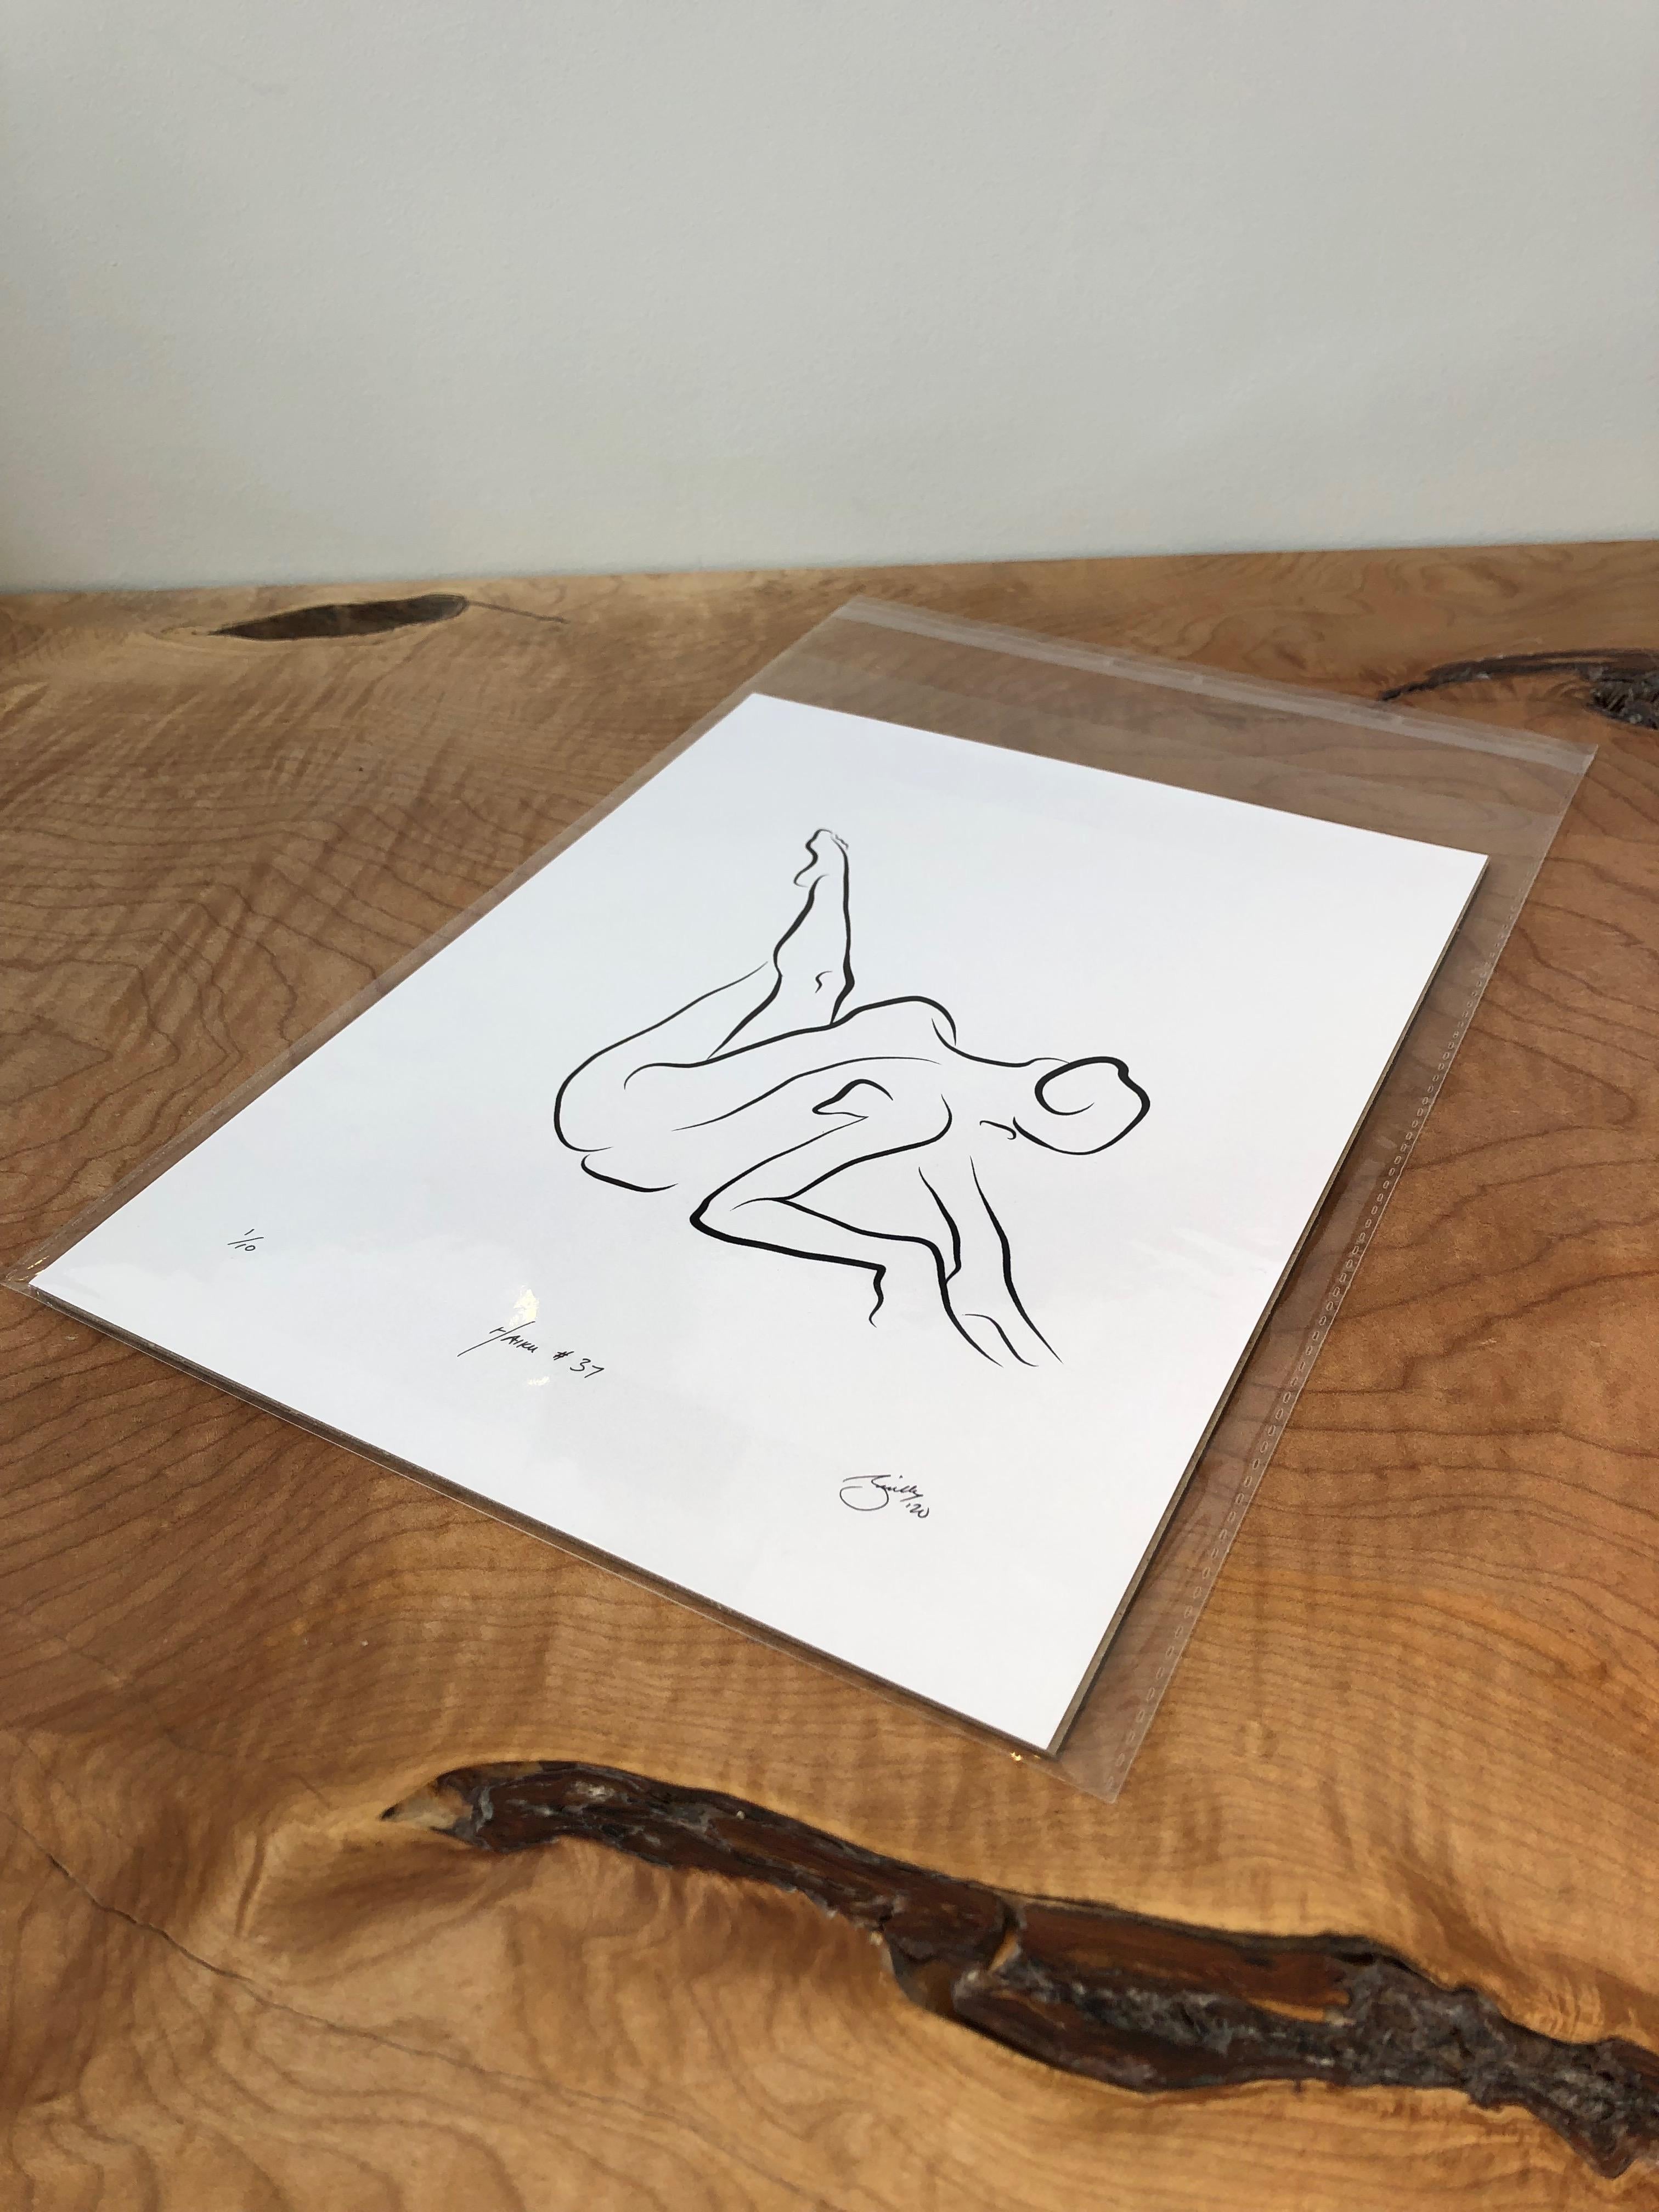 Haiku #37 - Digital Vector Drawing Dynamic Pose Seated Female Nude Woman Figure - Contemporary Art by Michael Binkley